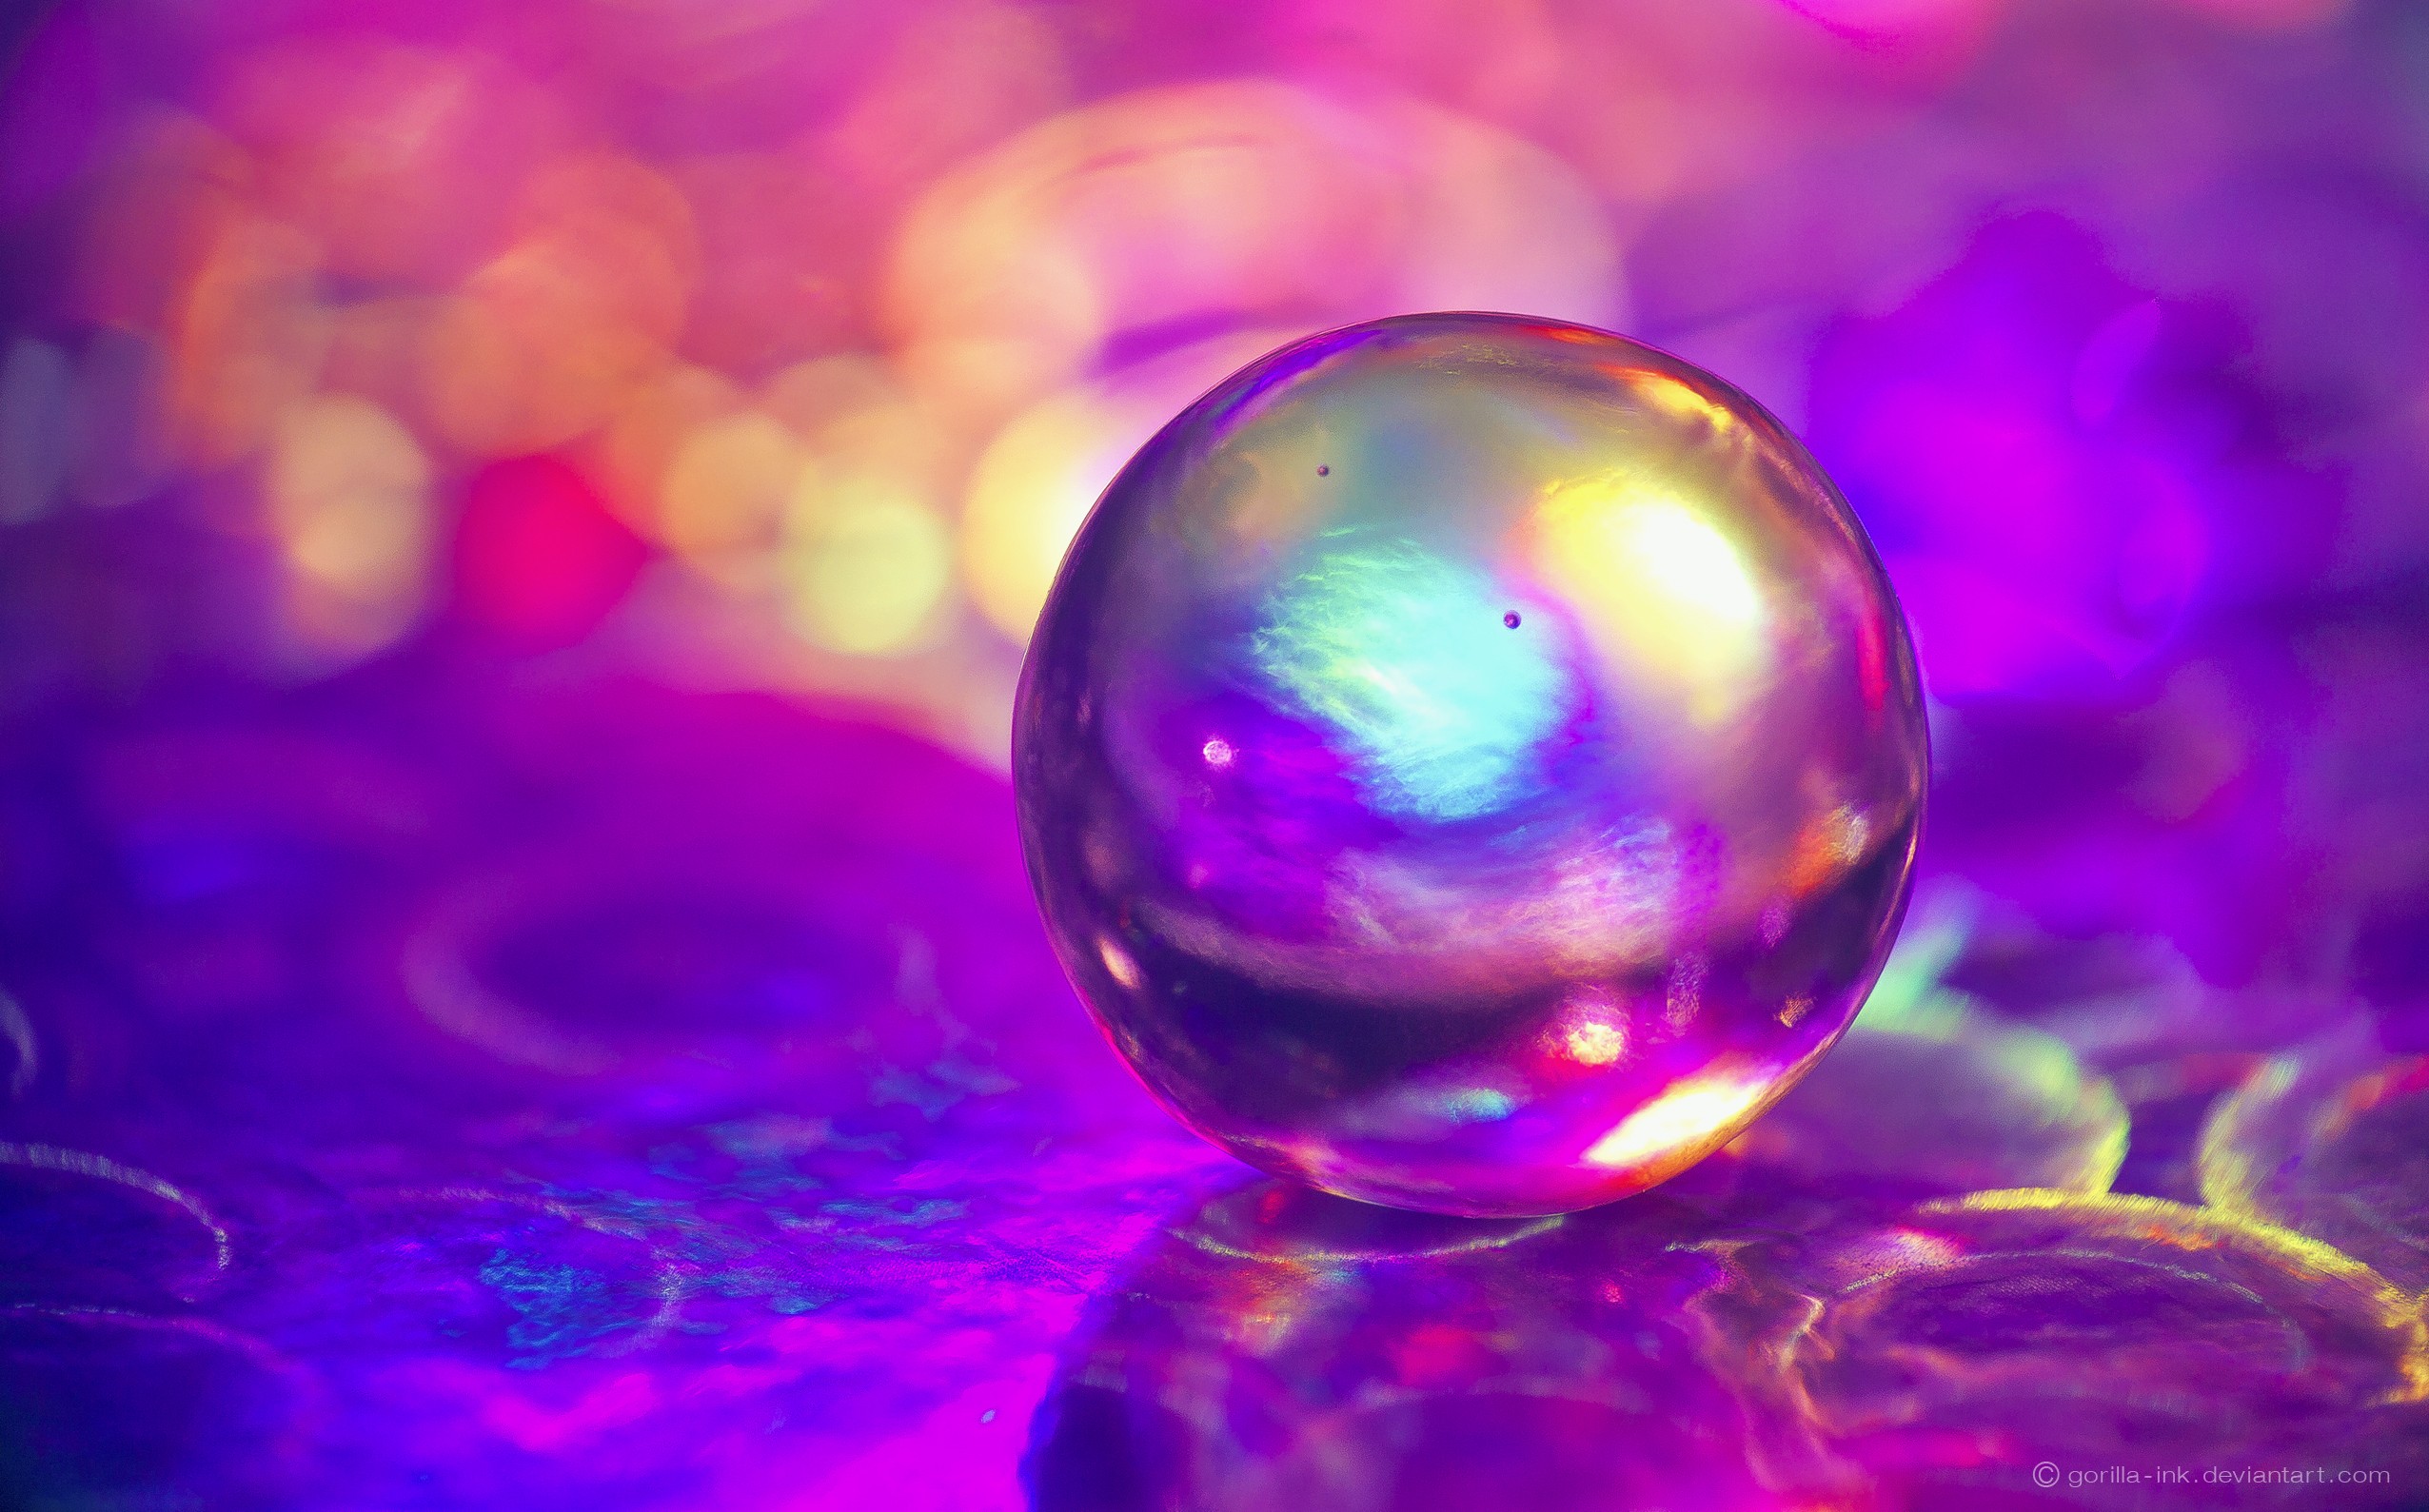 General 2552x1589 bubbles colorful macro bokeh pink sphere digital art watermarked DeviantArt reflection